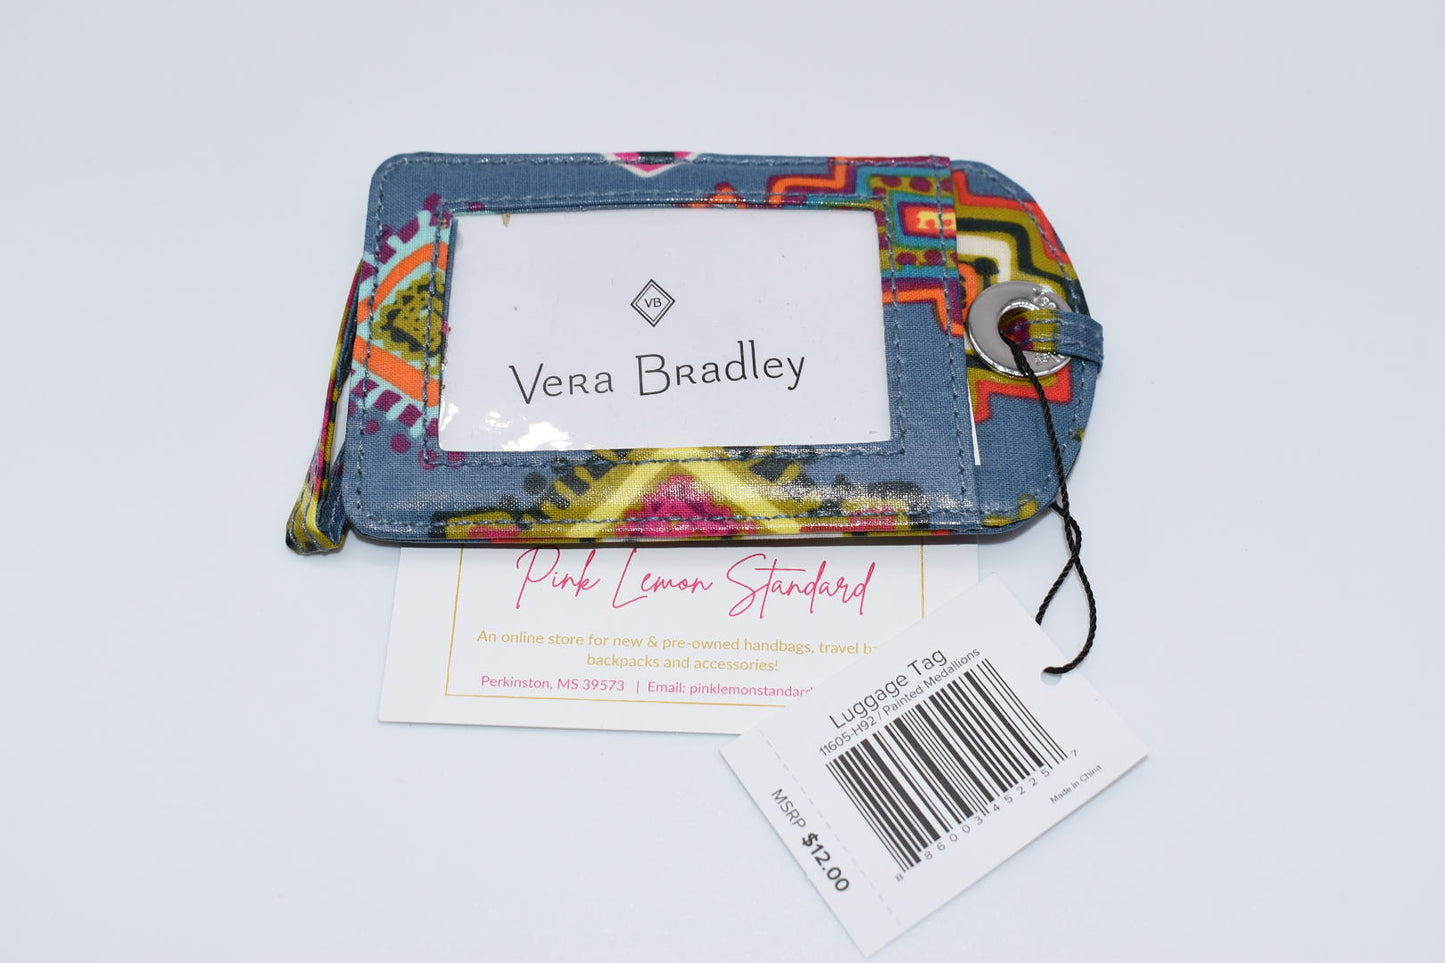 Vera Bradley ID Luggage Tag in "Painted Medallions" Pattern